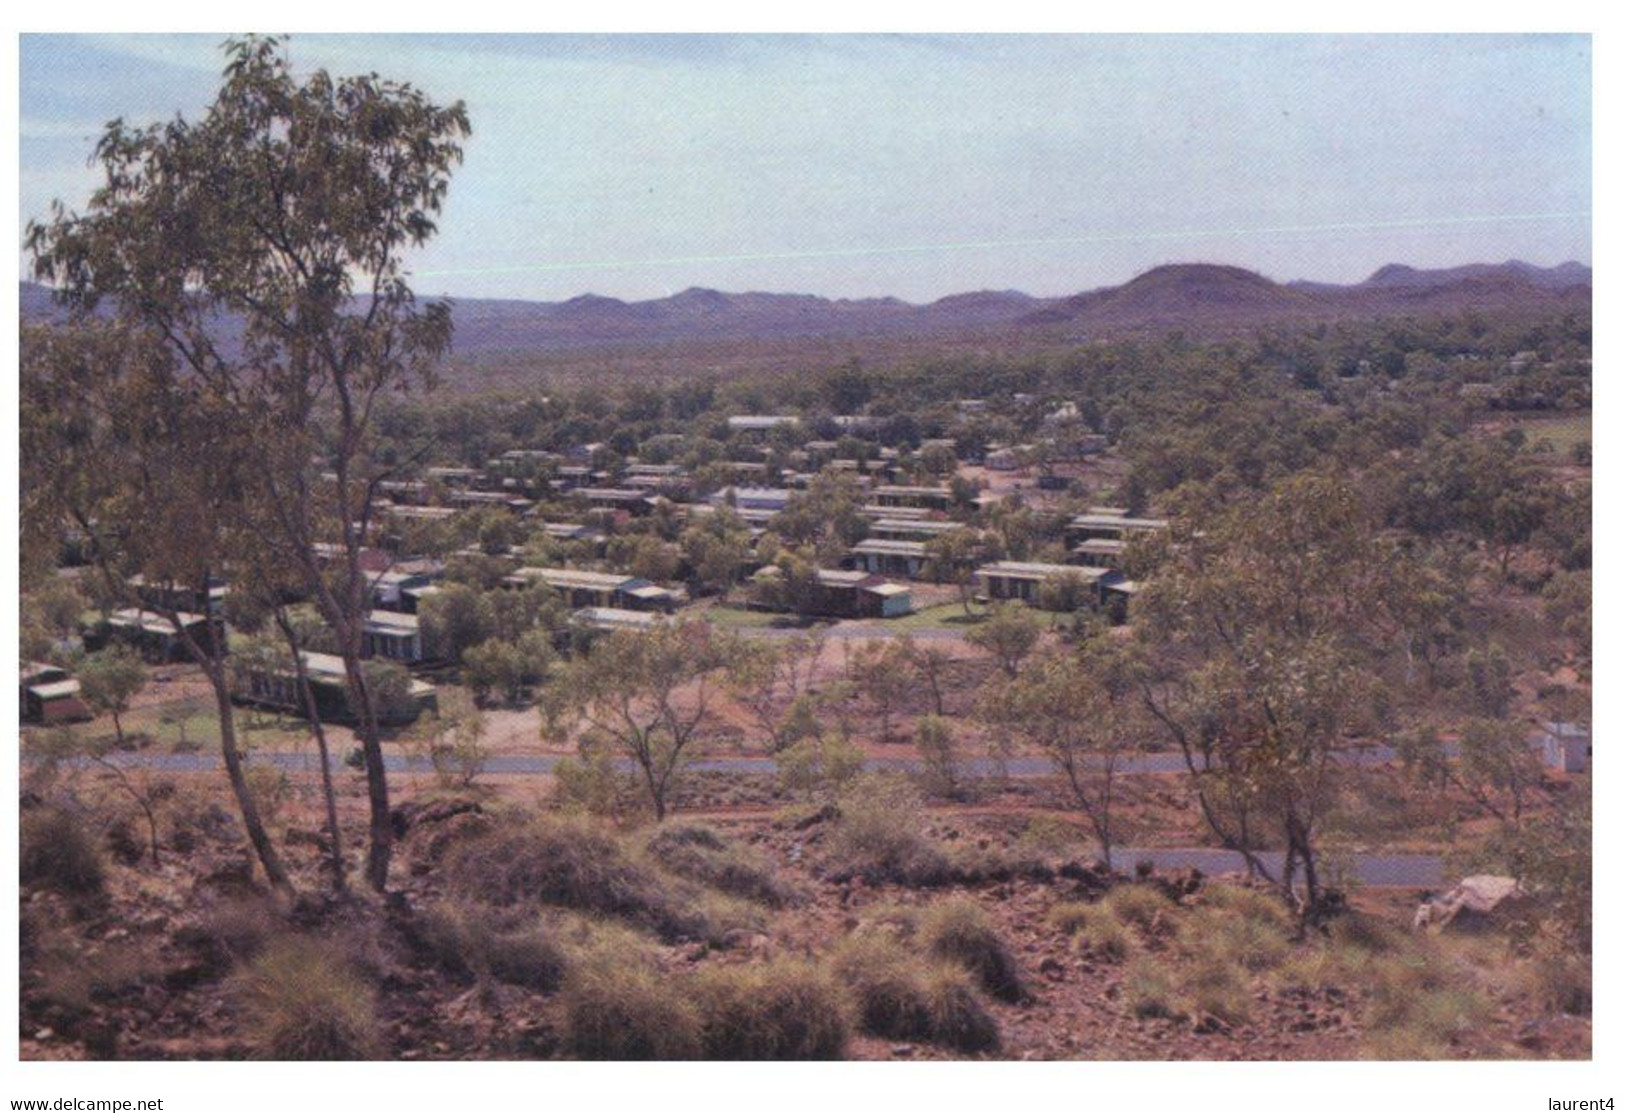 (HH 31) Australia - QLD - Mary Kathleen Township - Far North Queensland